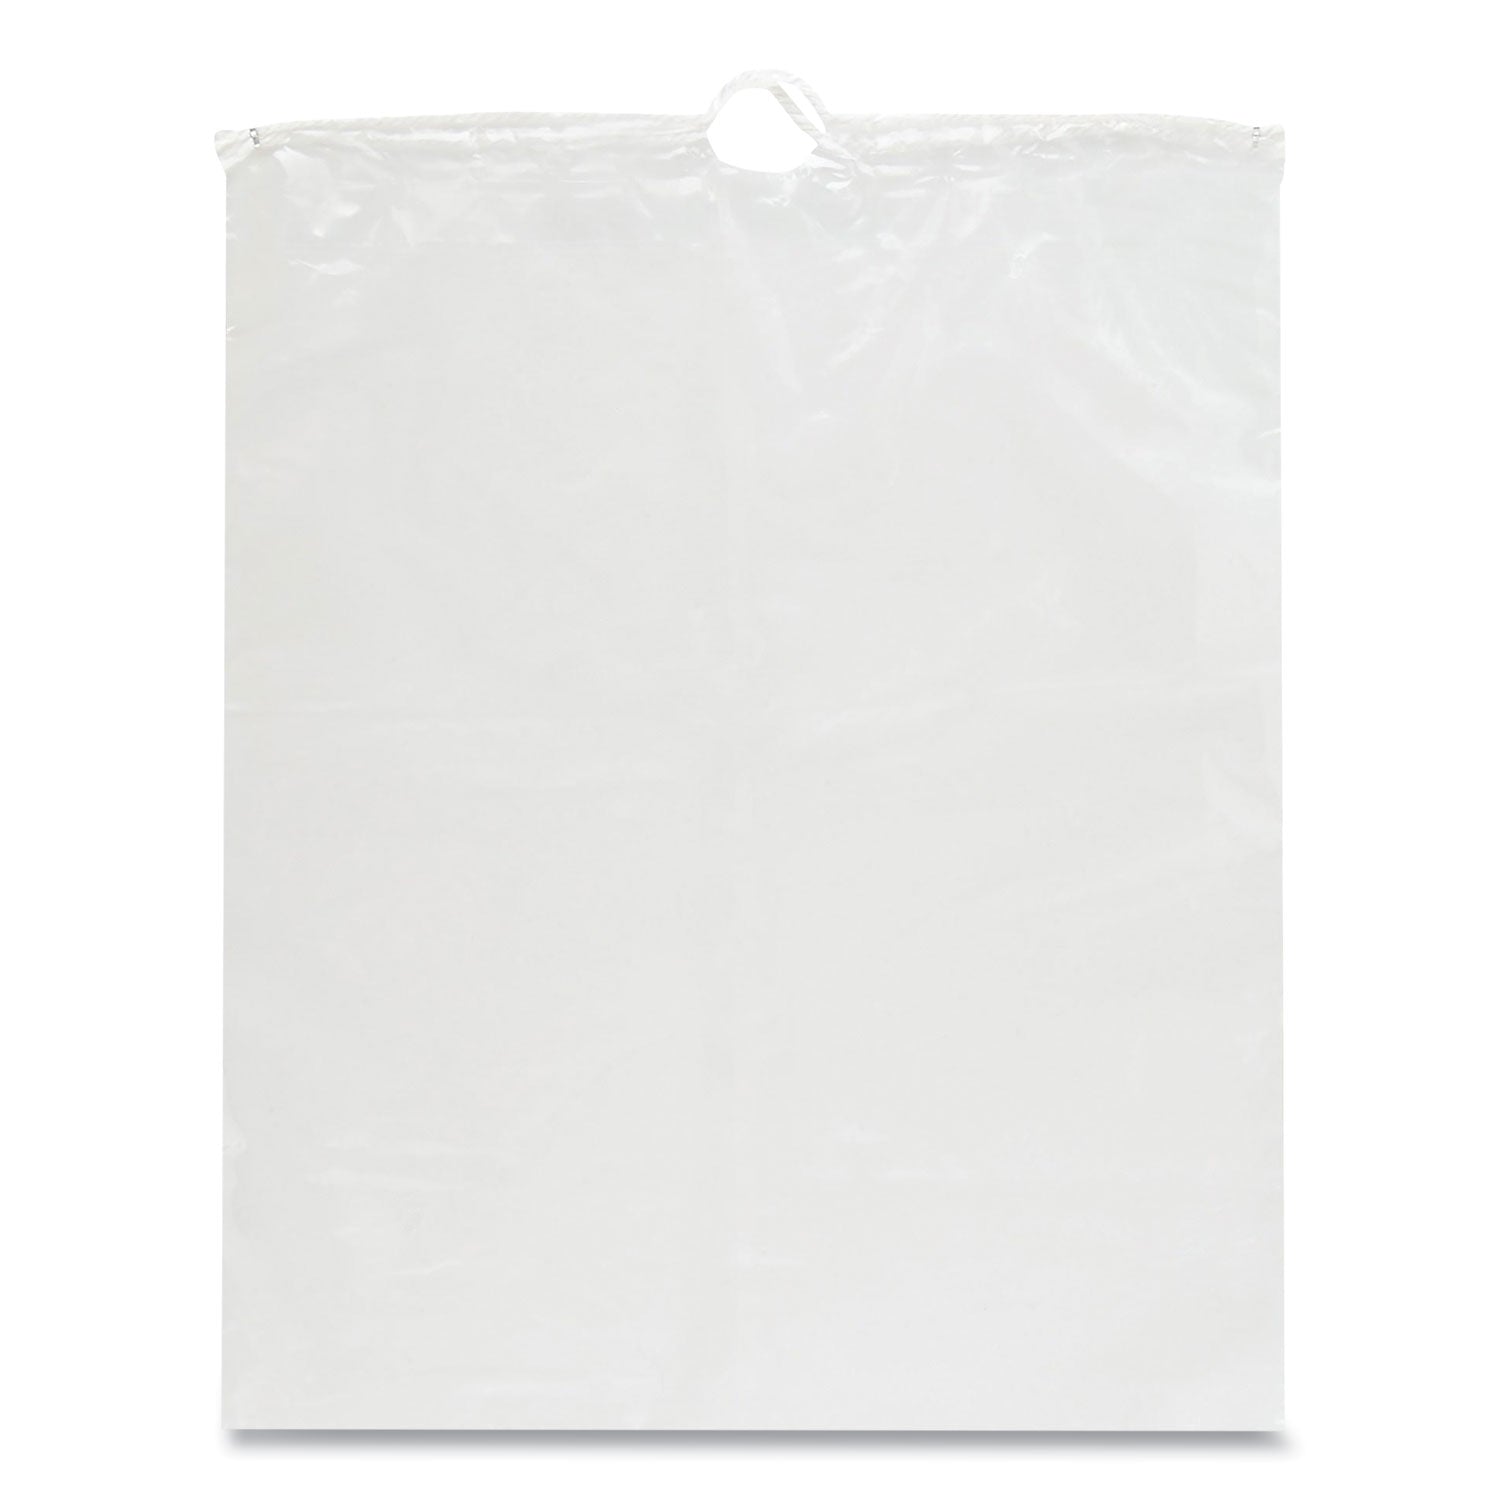 deposit-bags-polyethylene-12-x-15-clear-1000-carton_fgigal12x15ds - 1